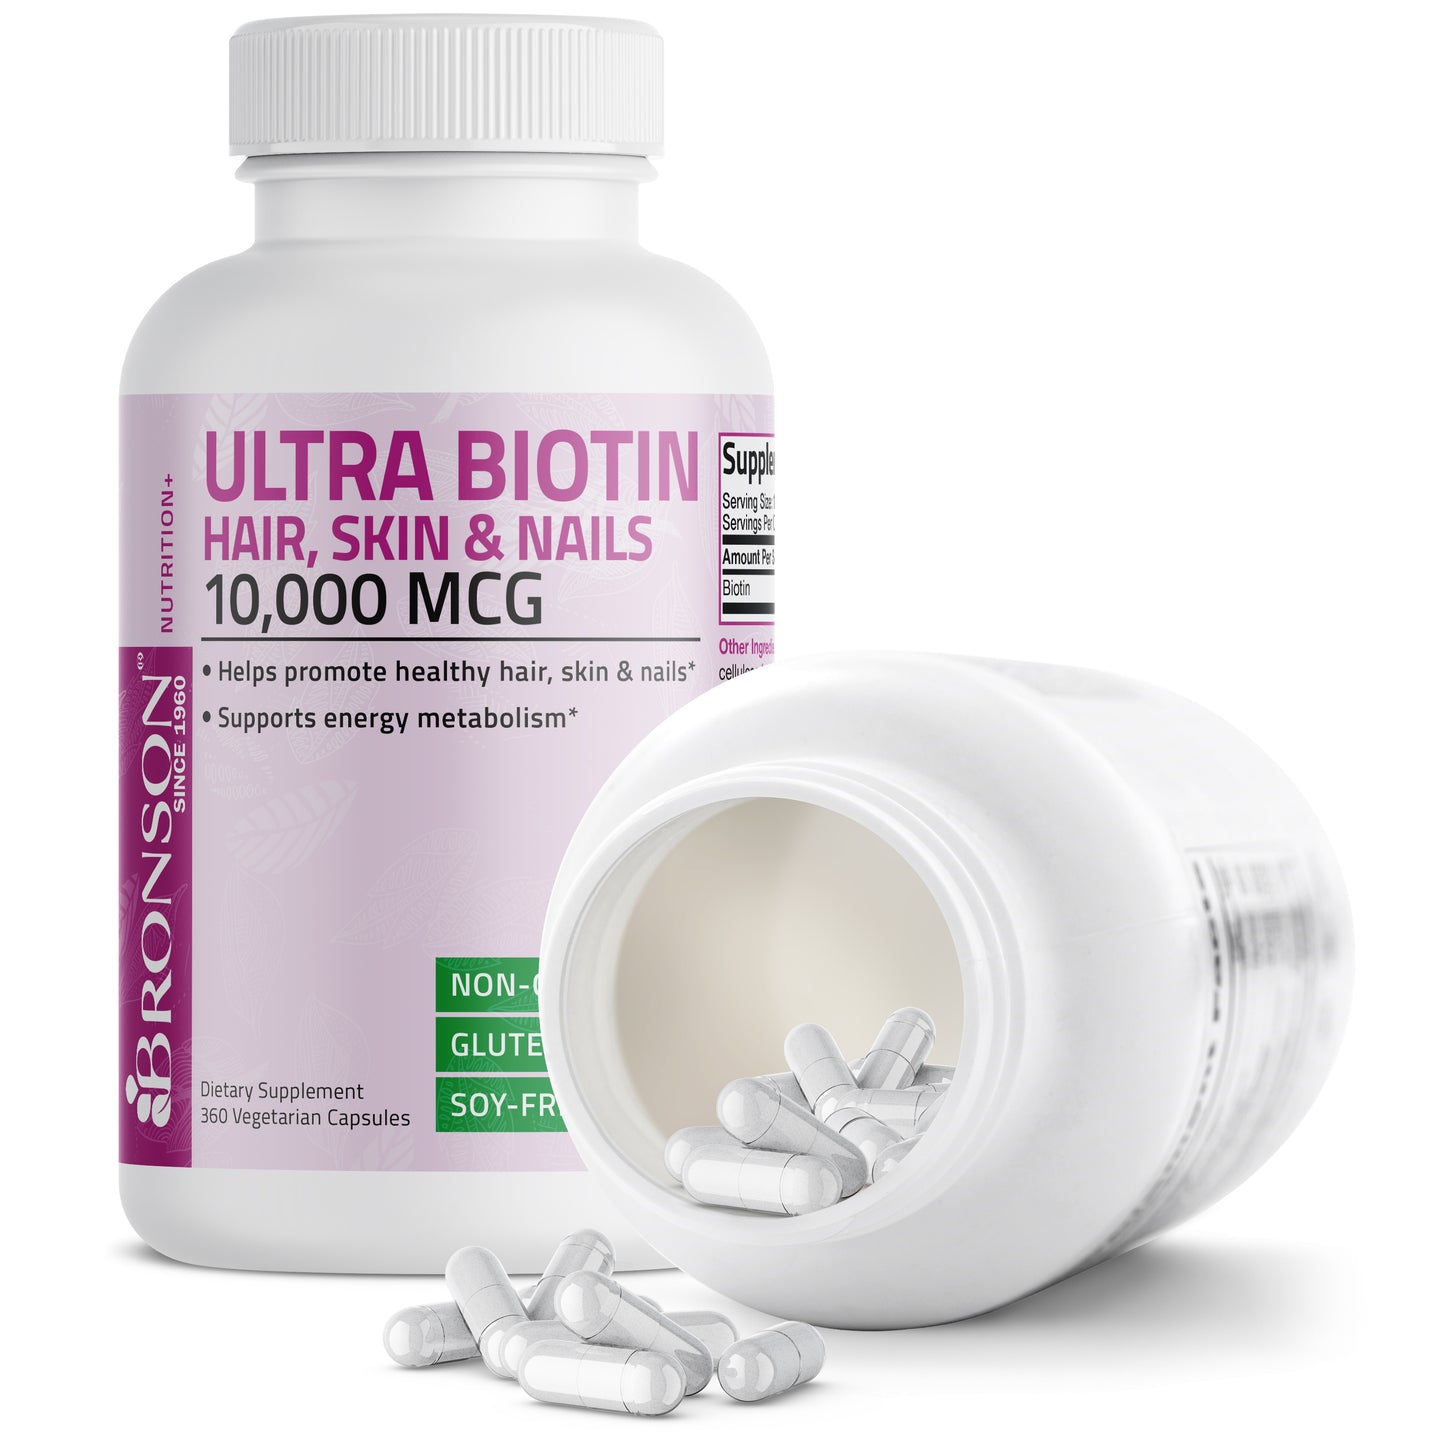 Ultra Biotin Hair, Skin & Nails - 10,000 mcg